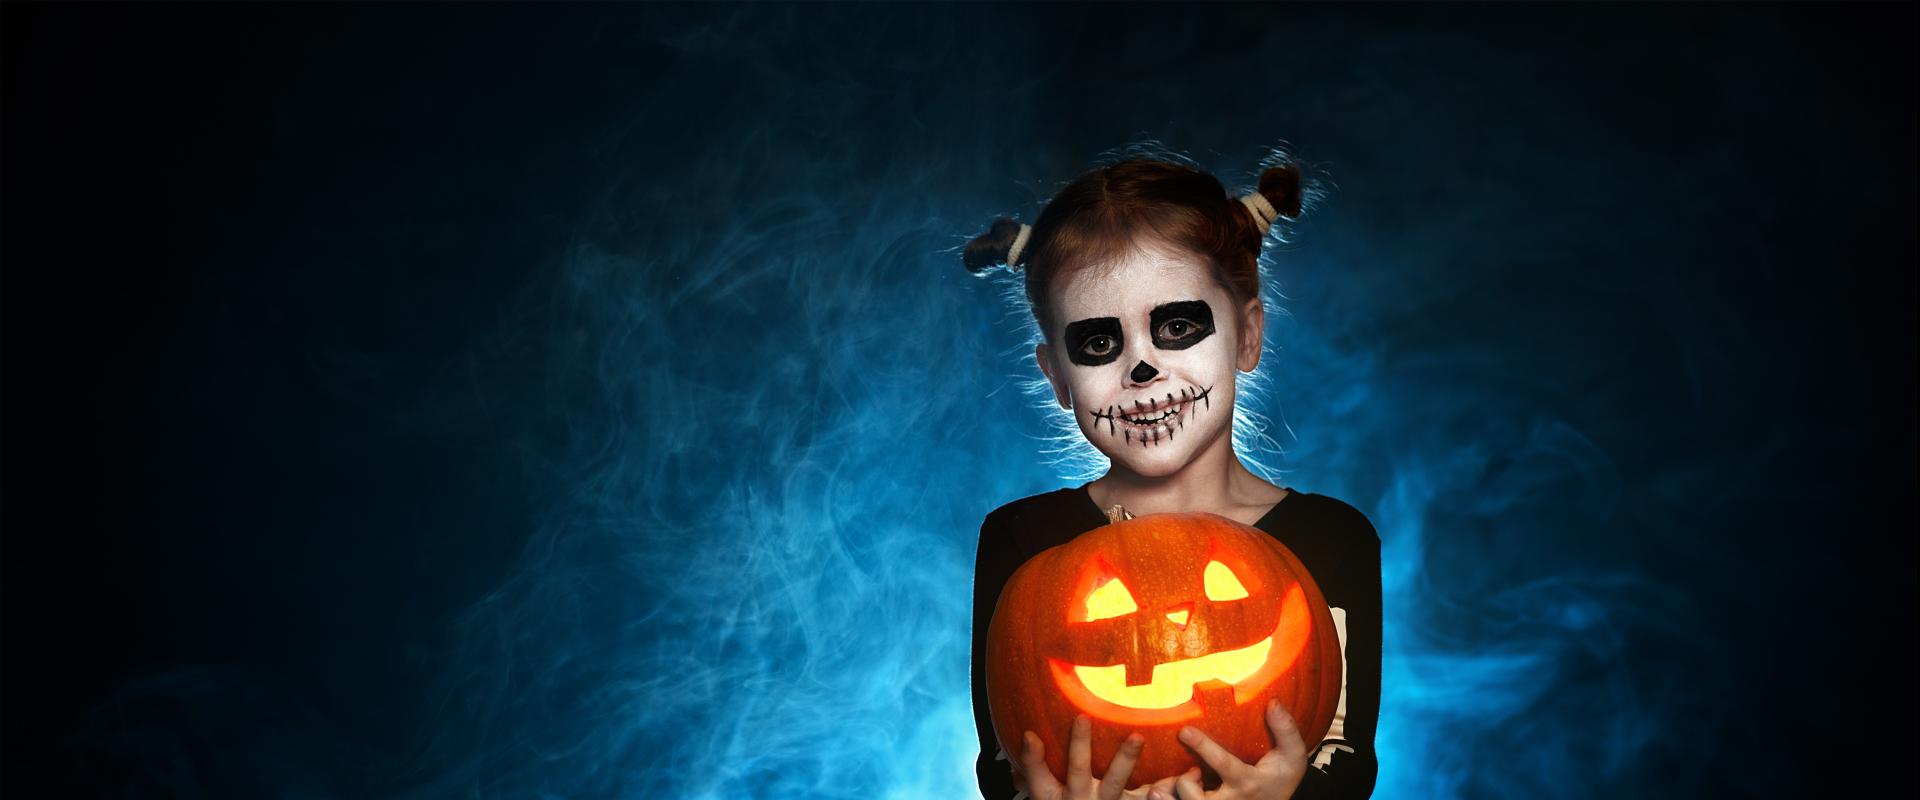 Merch gyda phwmpen as Calan Gaeaf / Girl with pumpkin at Halloween